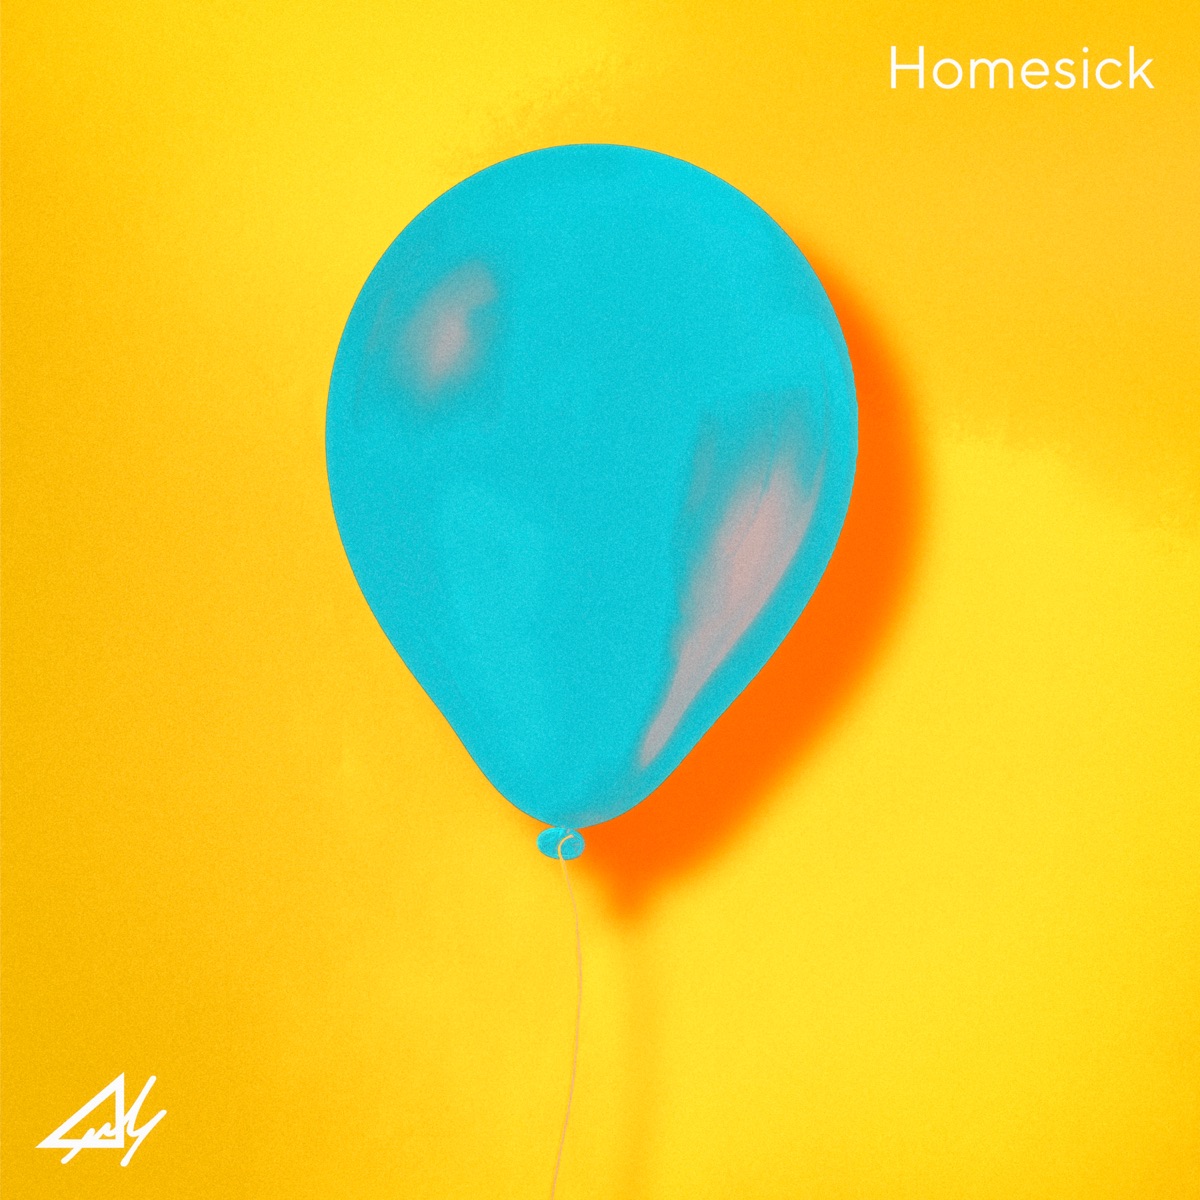 『Anly - Homesick 歌詞』収録の『Homesick』ジャケット